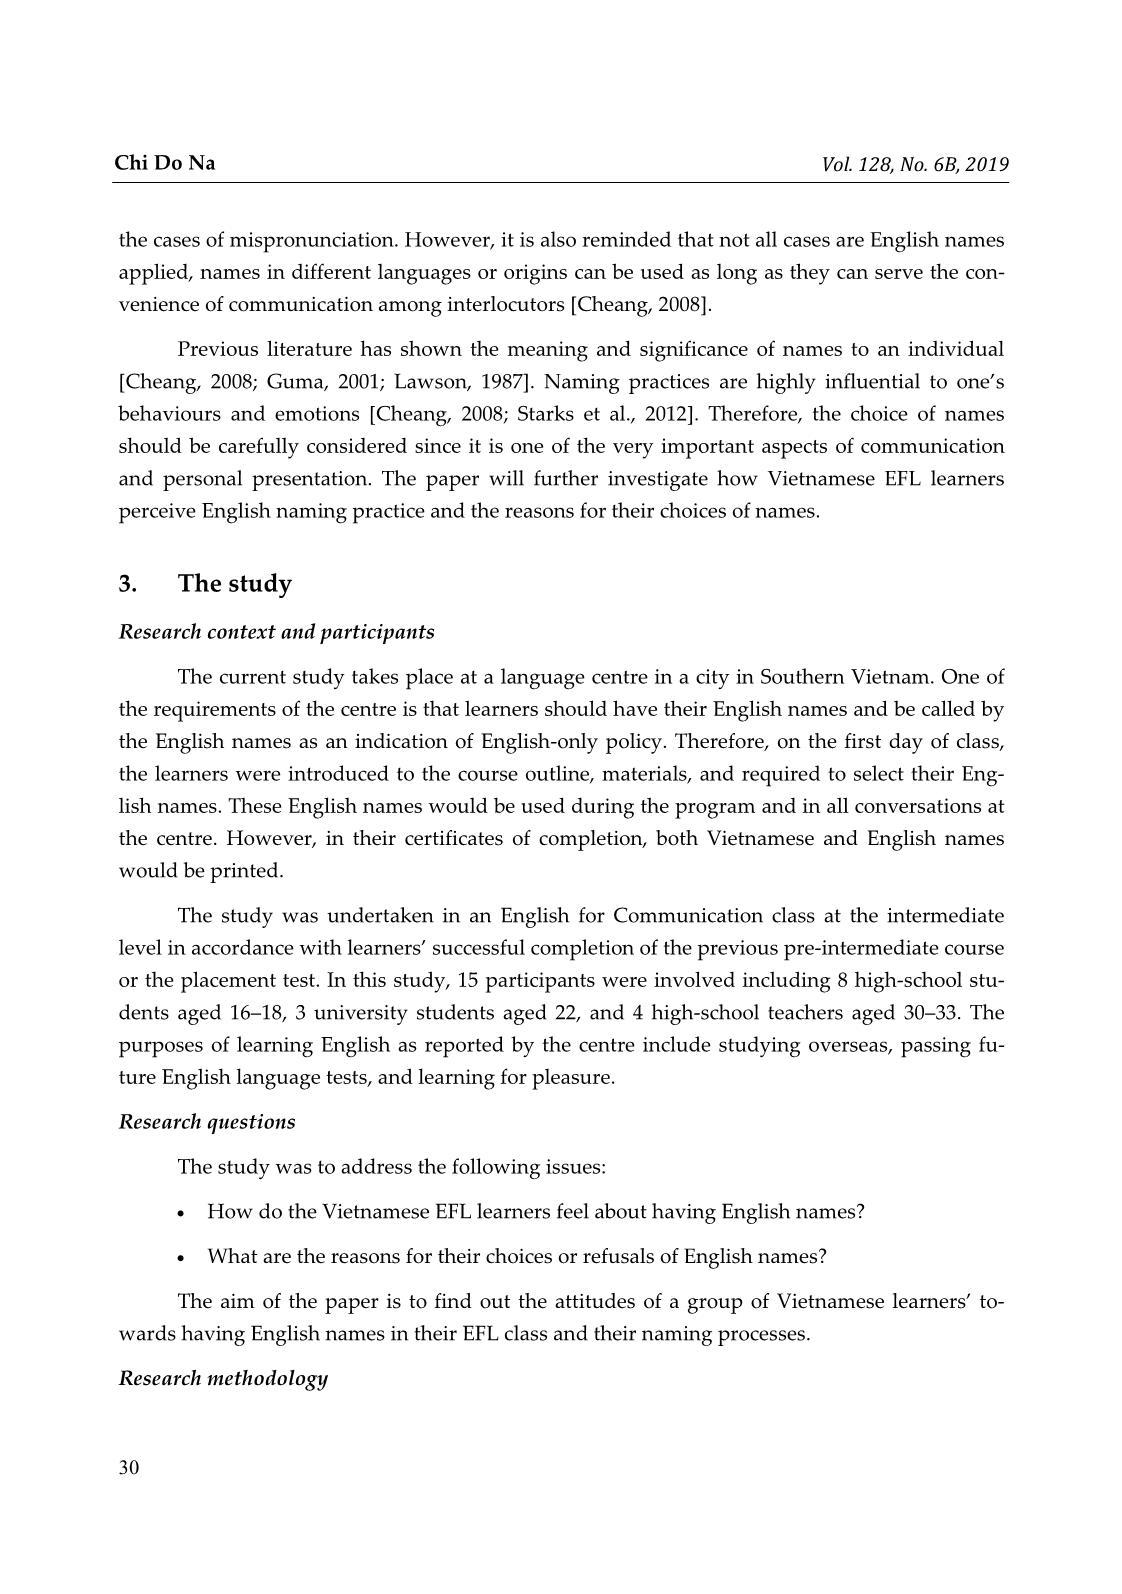 Should Vietnamese EFL learners have English names? trang 4